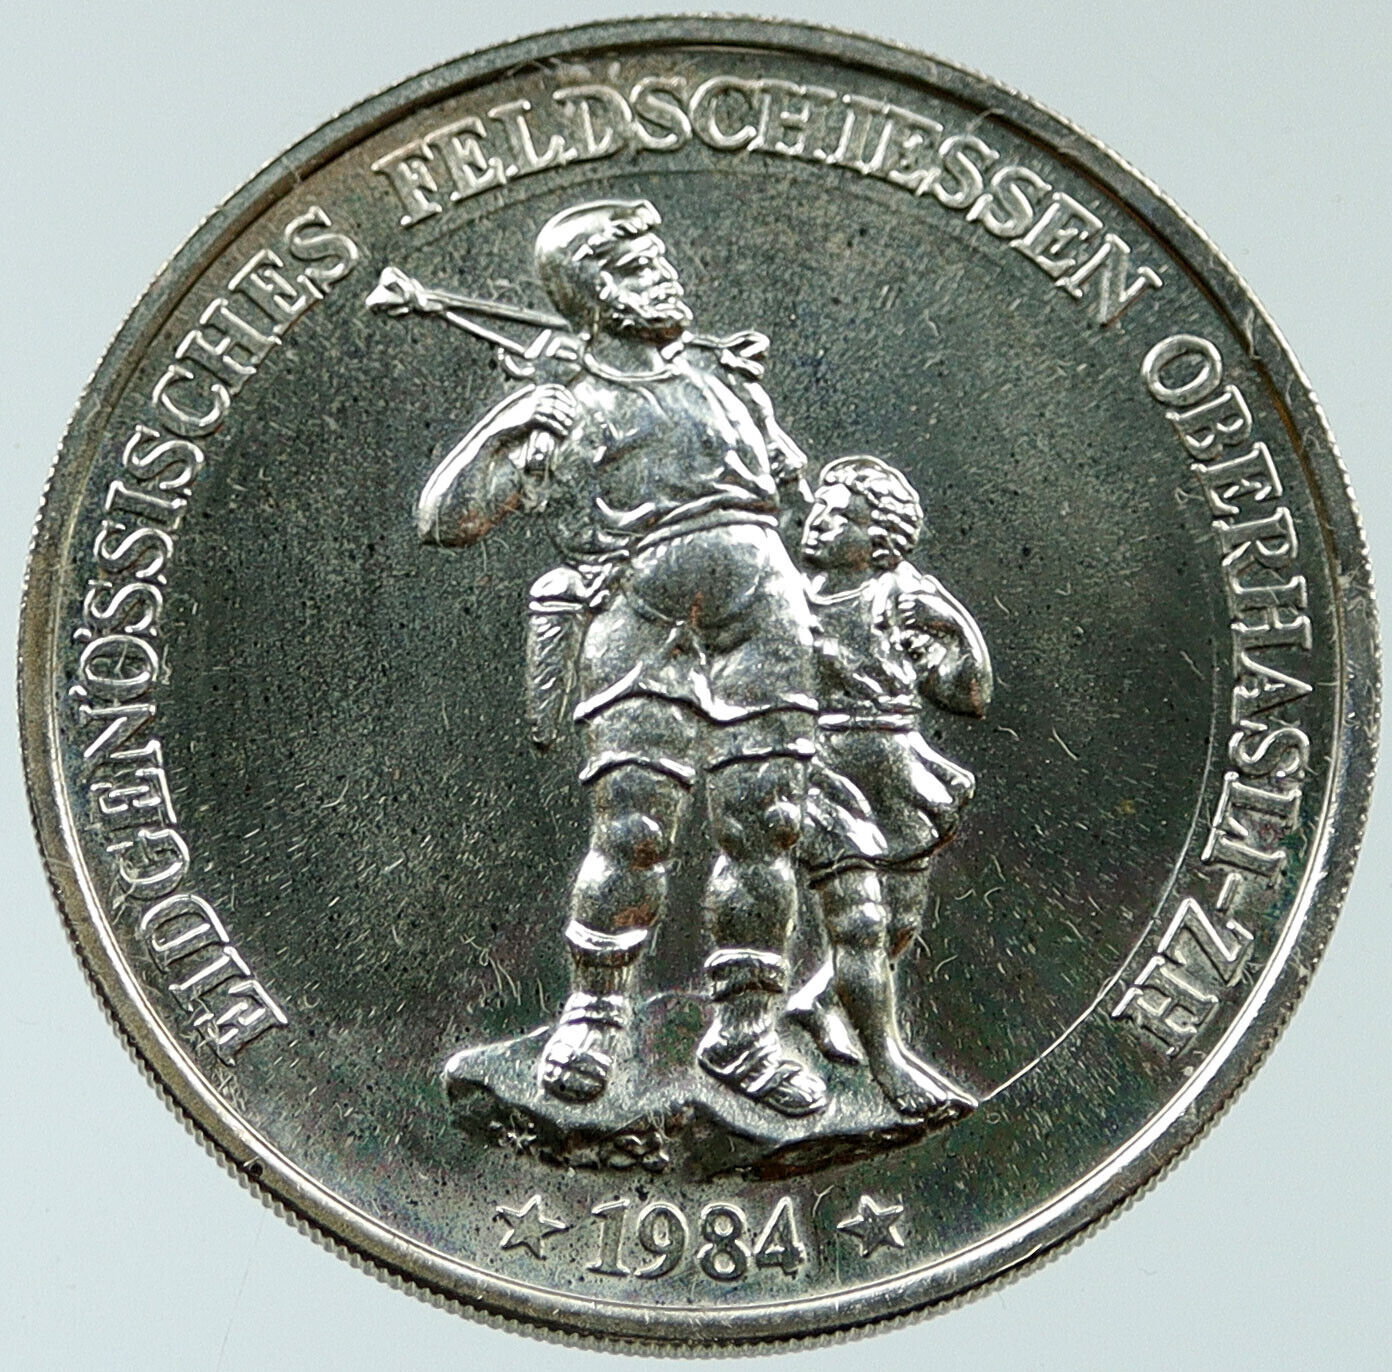 1984 SWITZERLAND Swiss SHOOTING FESTIVAL Oberhasli Silver 50 Francs Coin i117635